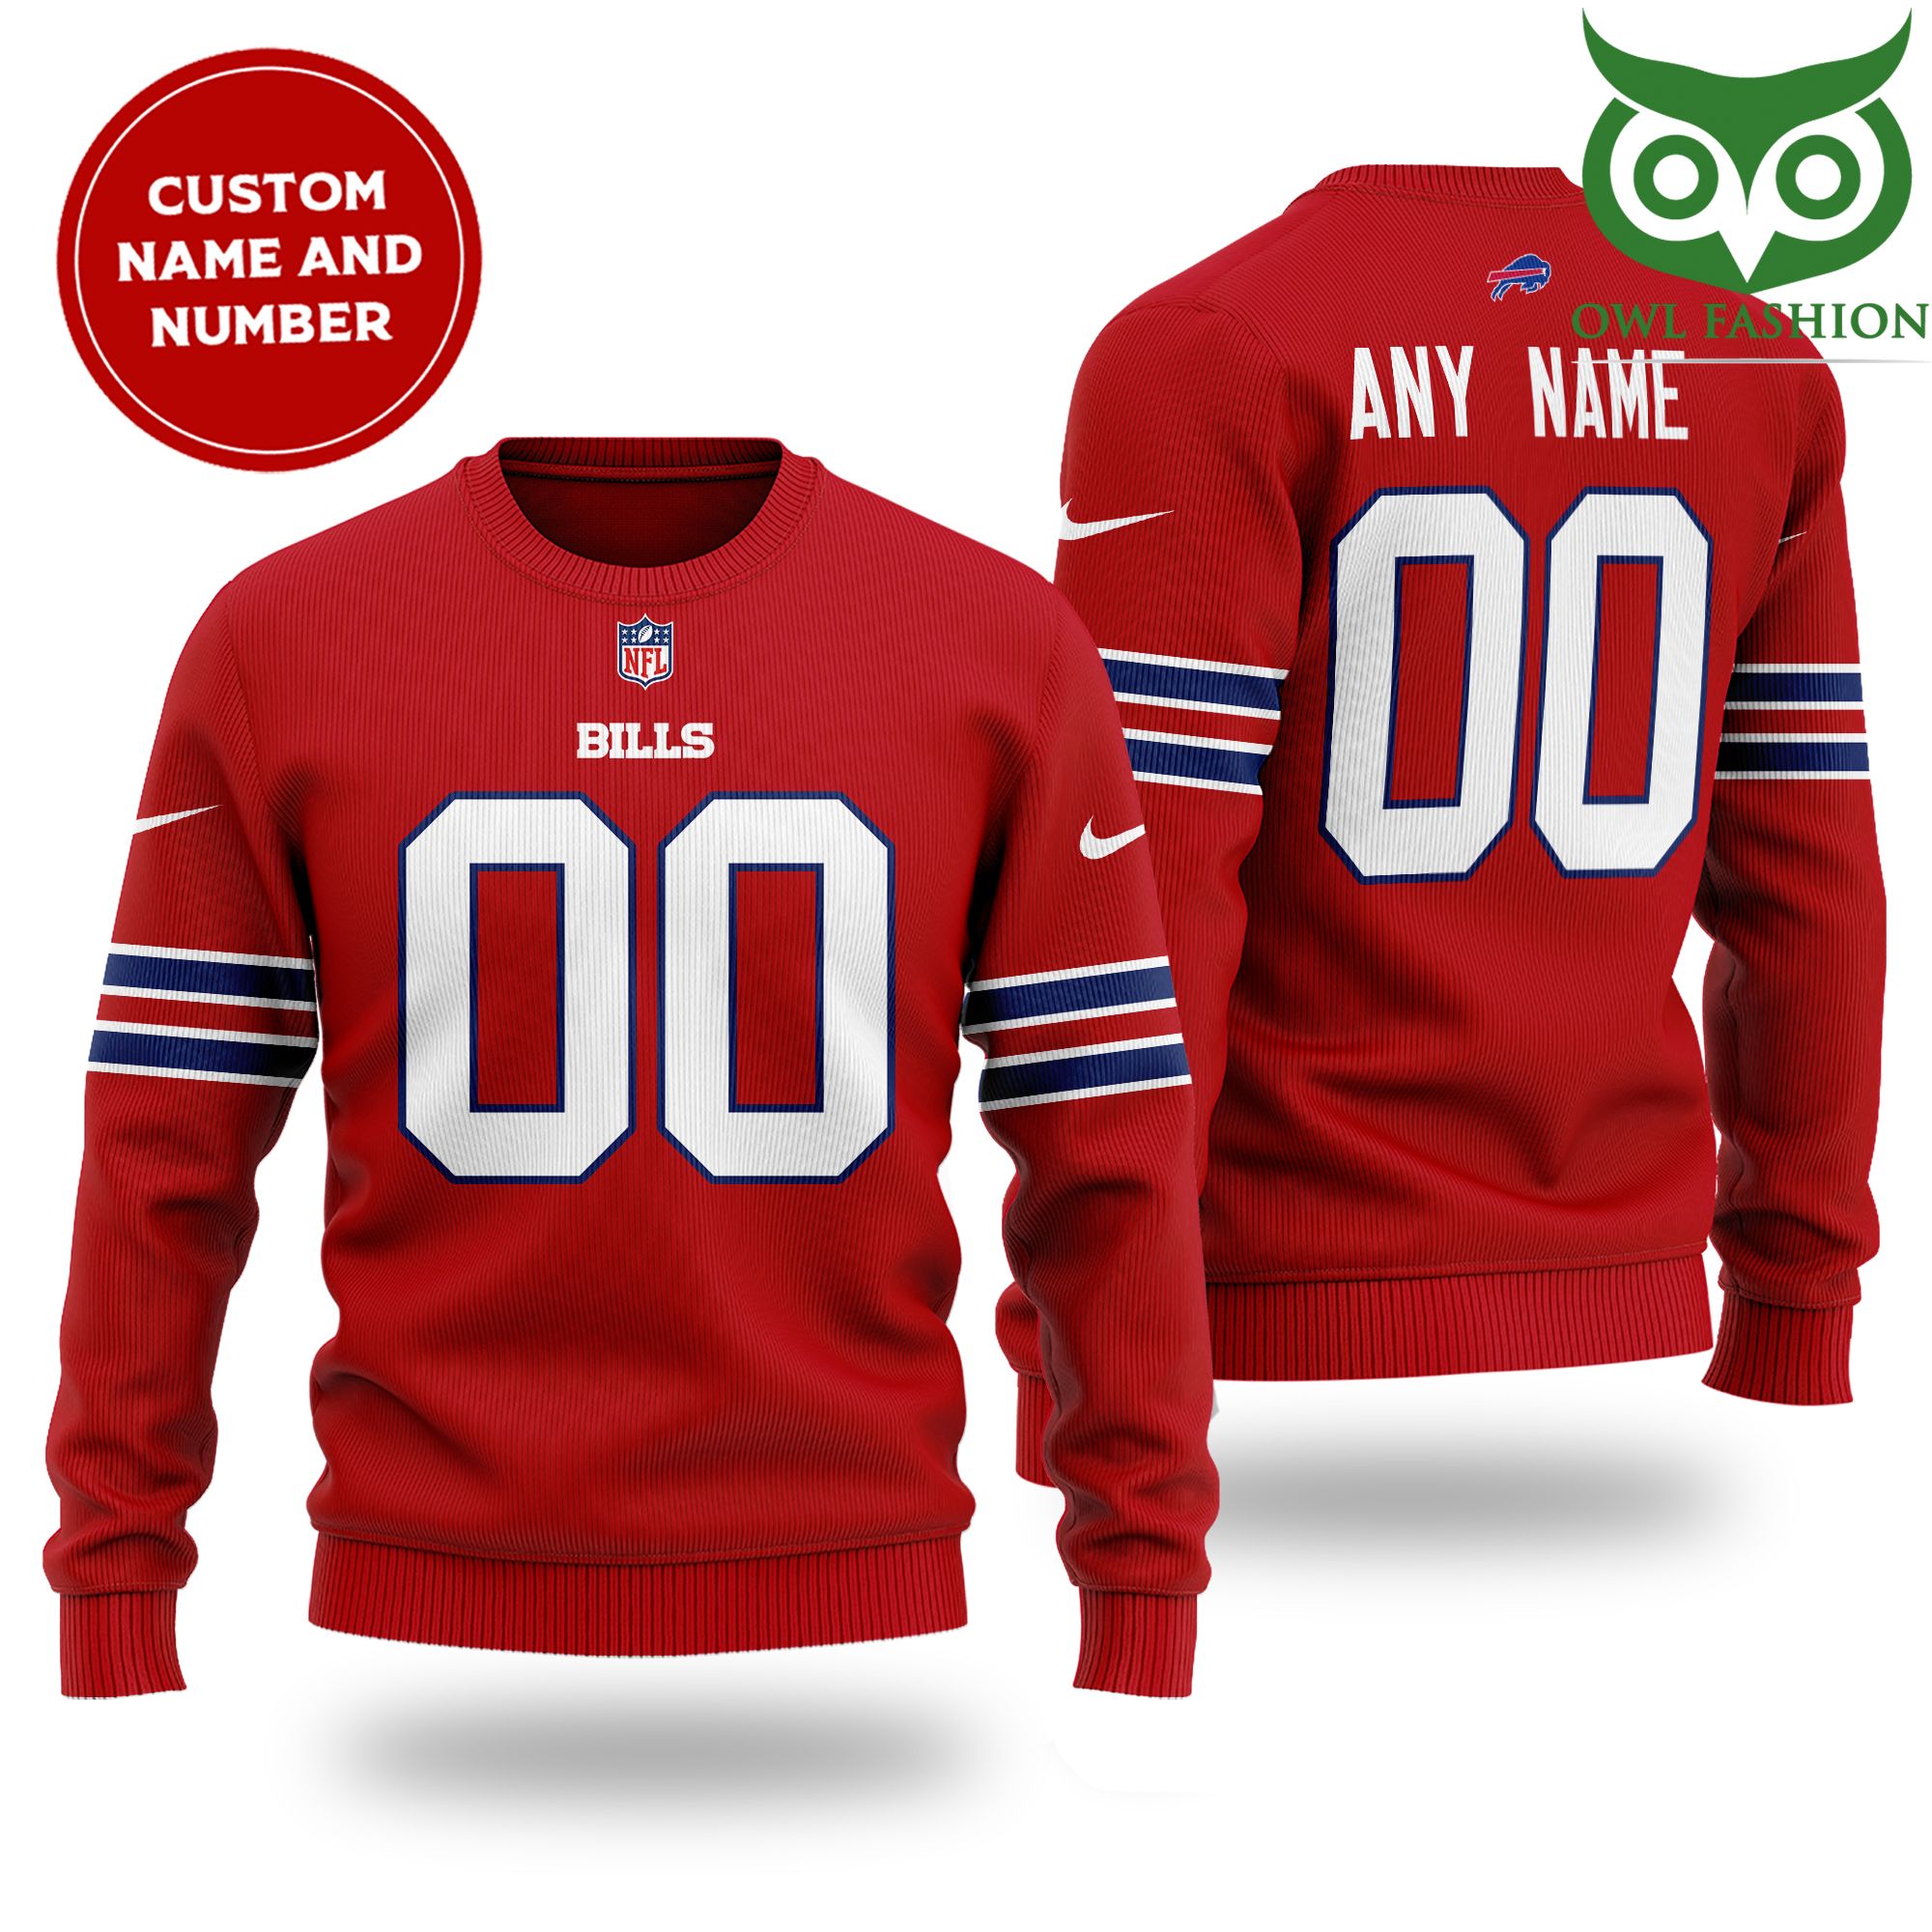 Personalized NFL BUFFALO BILLS red Sweater